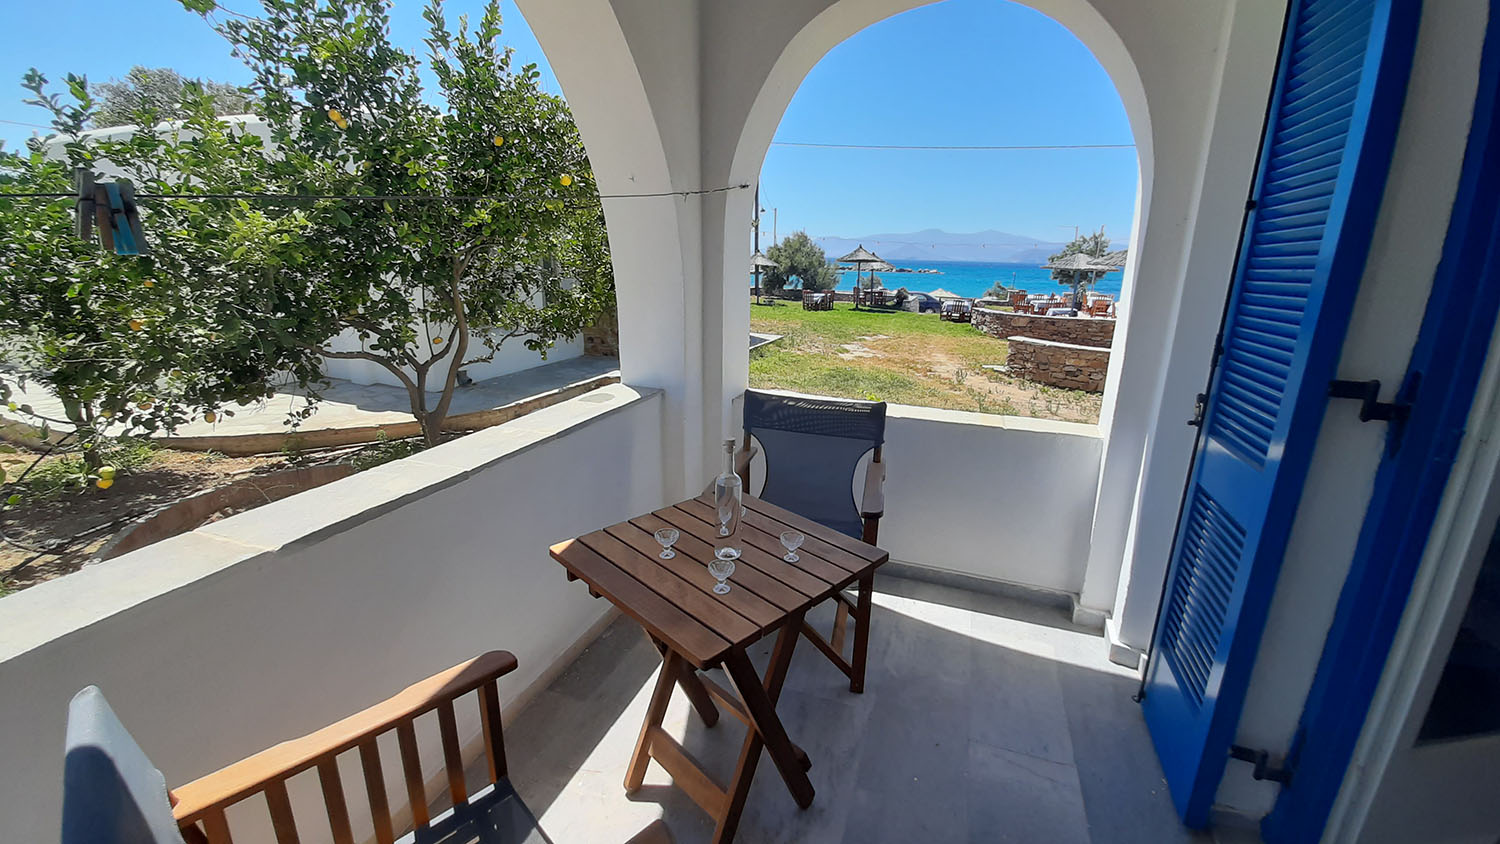 Agia Anna Hotel Naxos